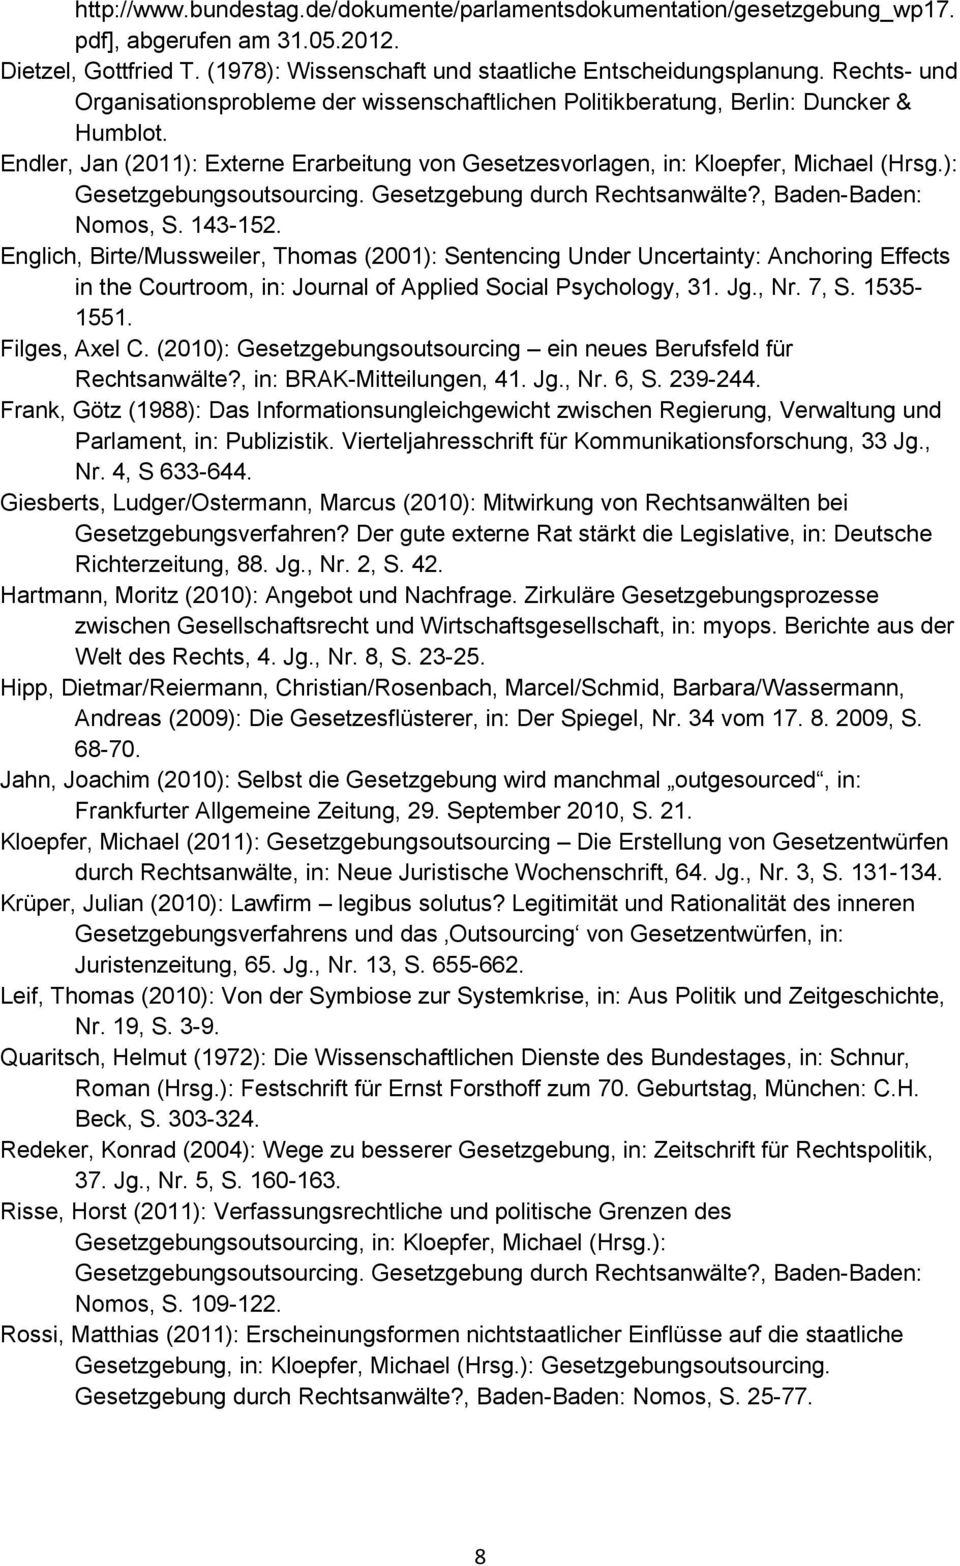 ): Gesetzgebungsoutsourcing. Gesetzgebung durch Rechtsanwälte?, Baden-Baden: Nomos, S. 143-152.